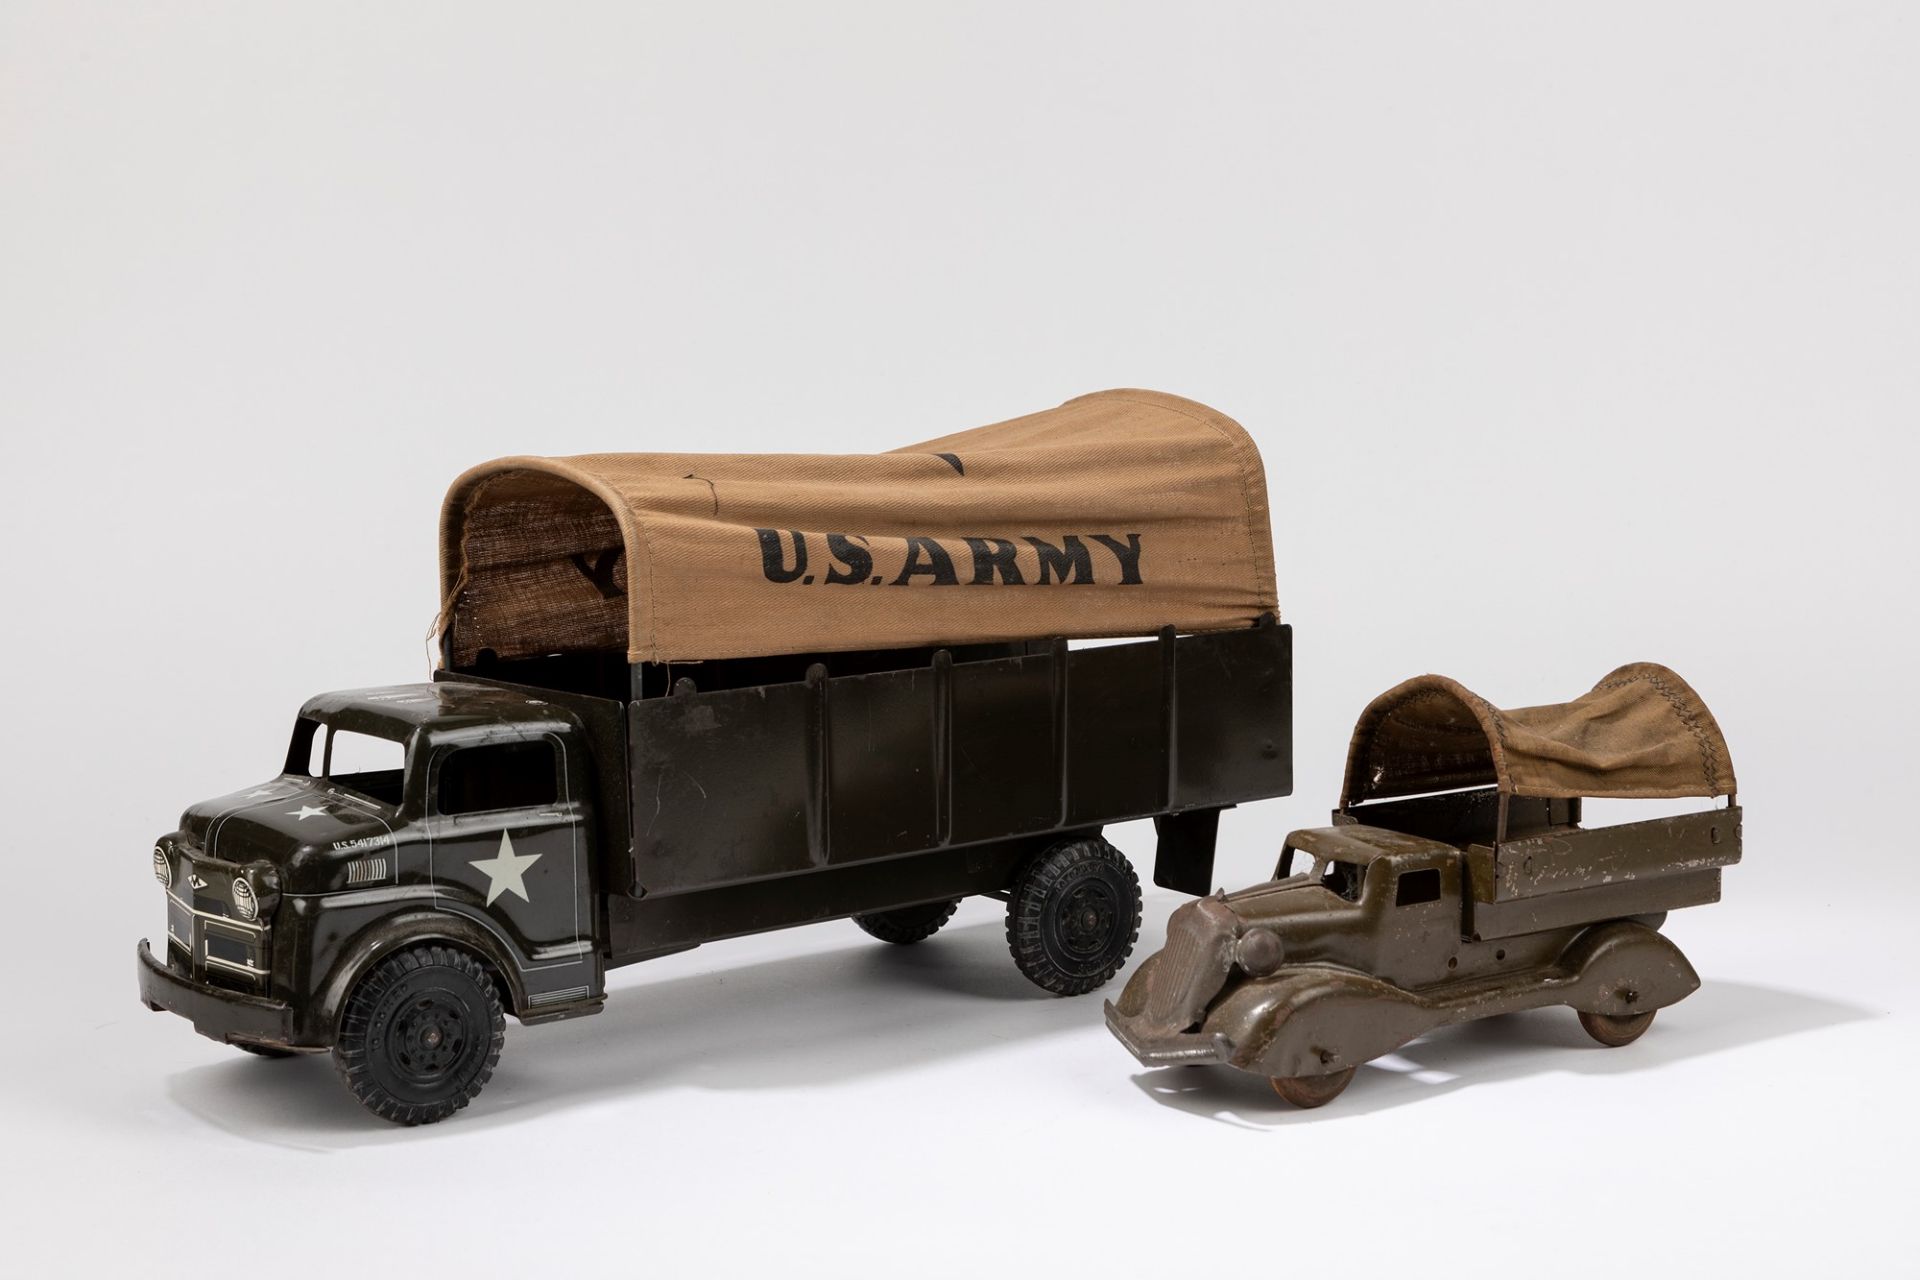 Marx Toys - Two USA Army military trucks